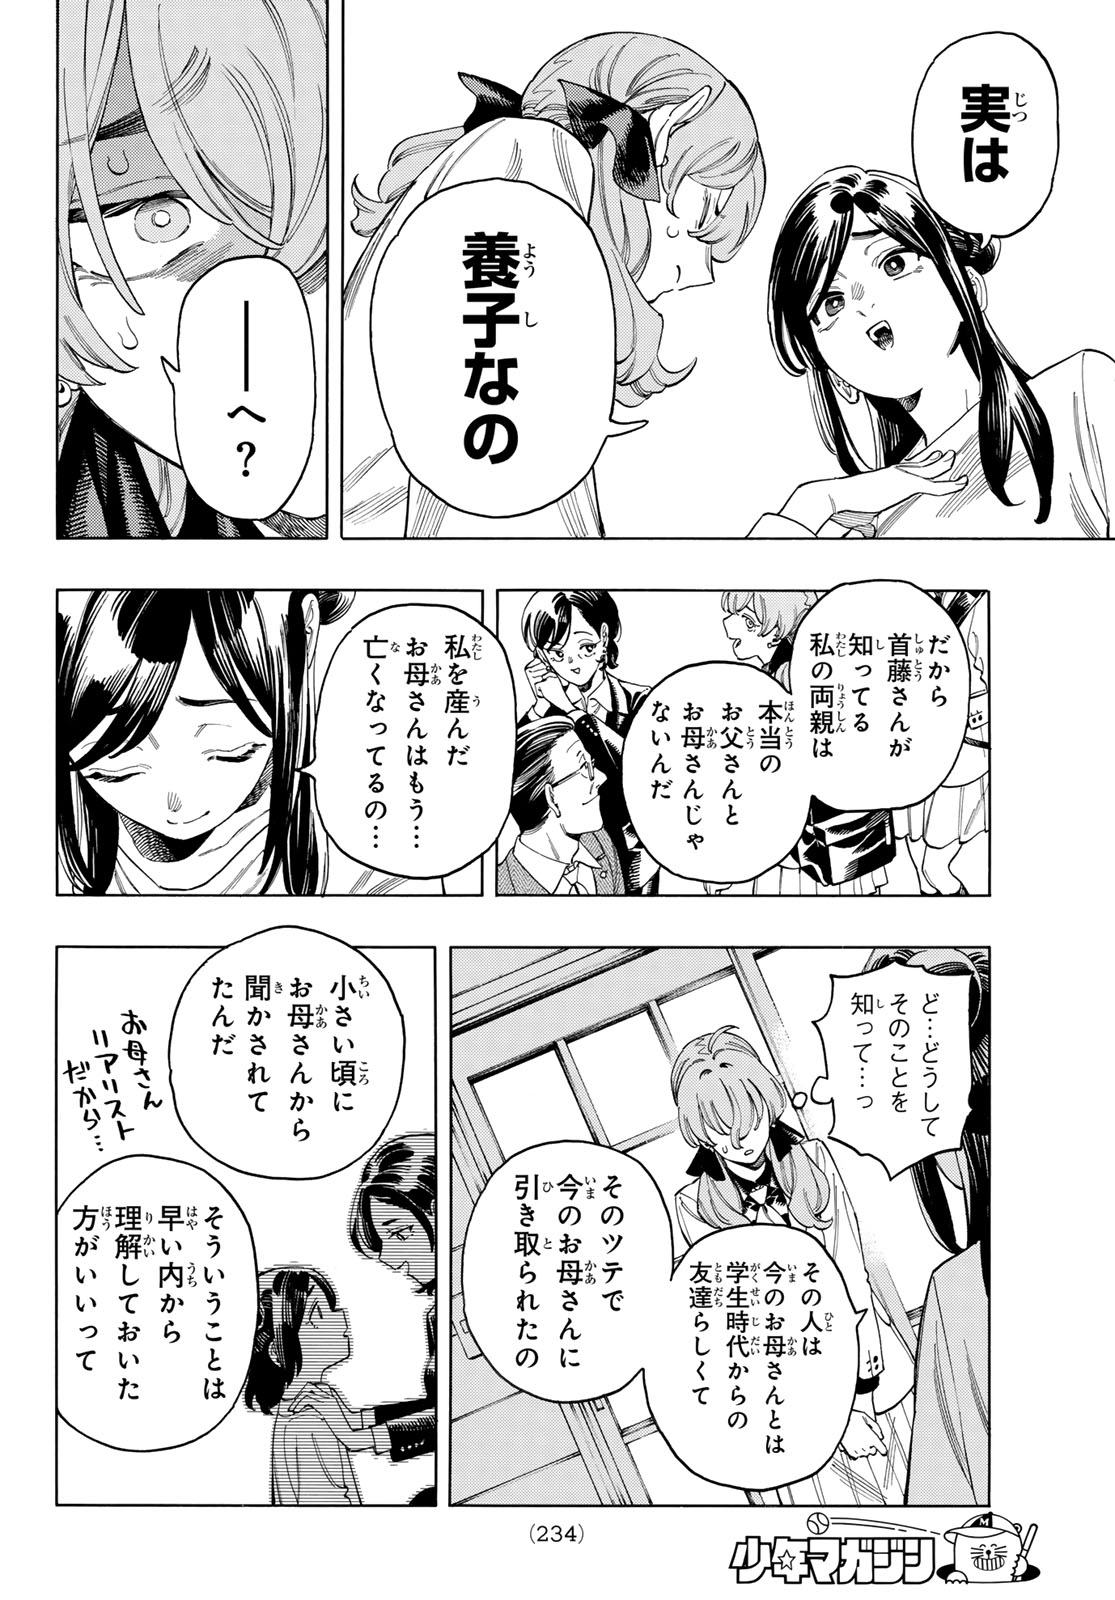 Akabane Honeko no Bodyguard - Chapter 88 - Page 10